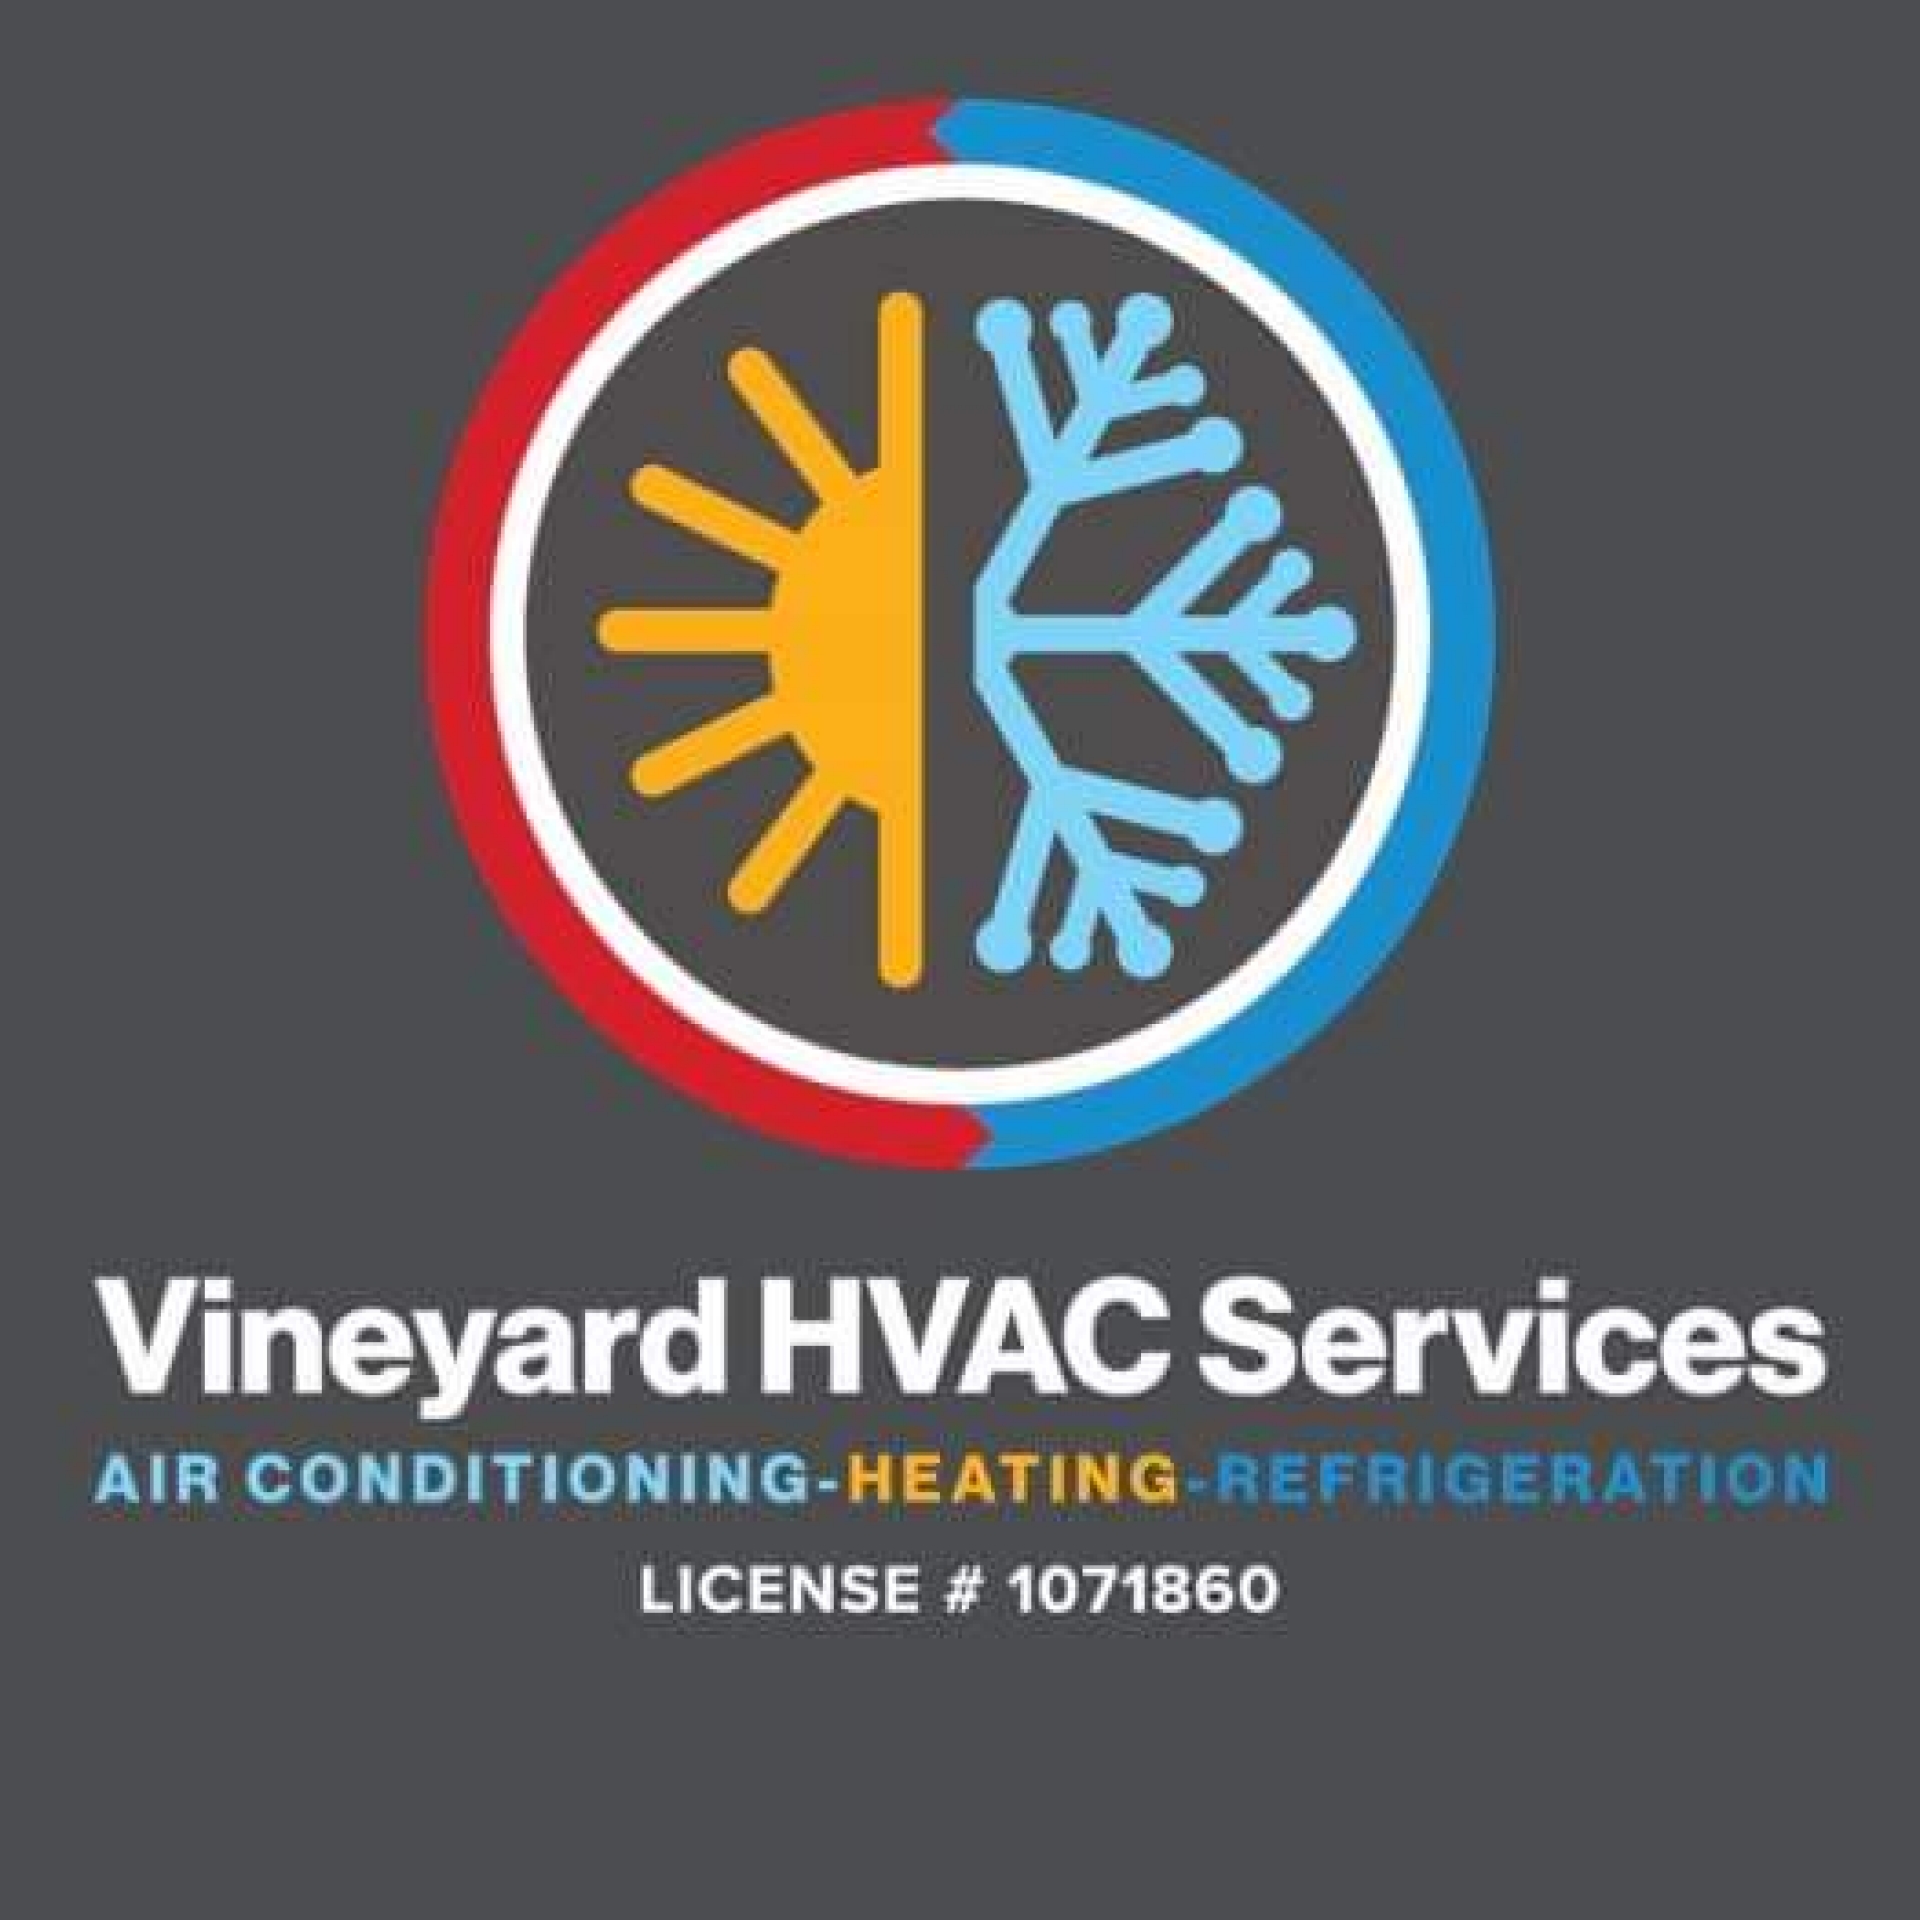 Vineyard HVAC Services company logo